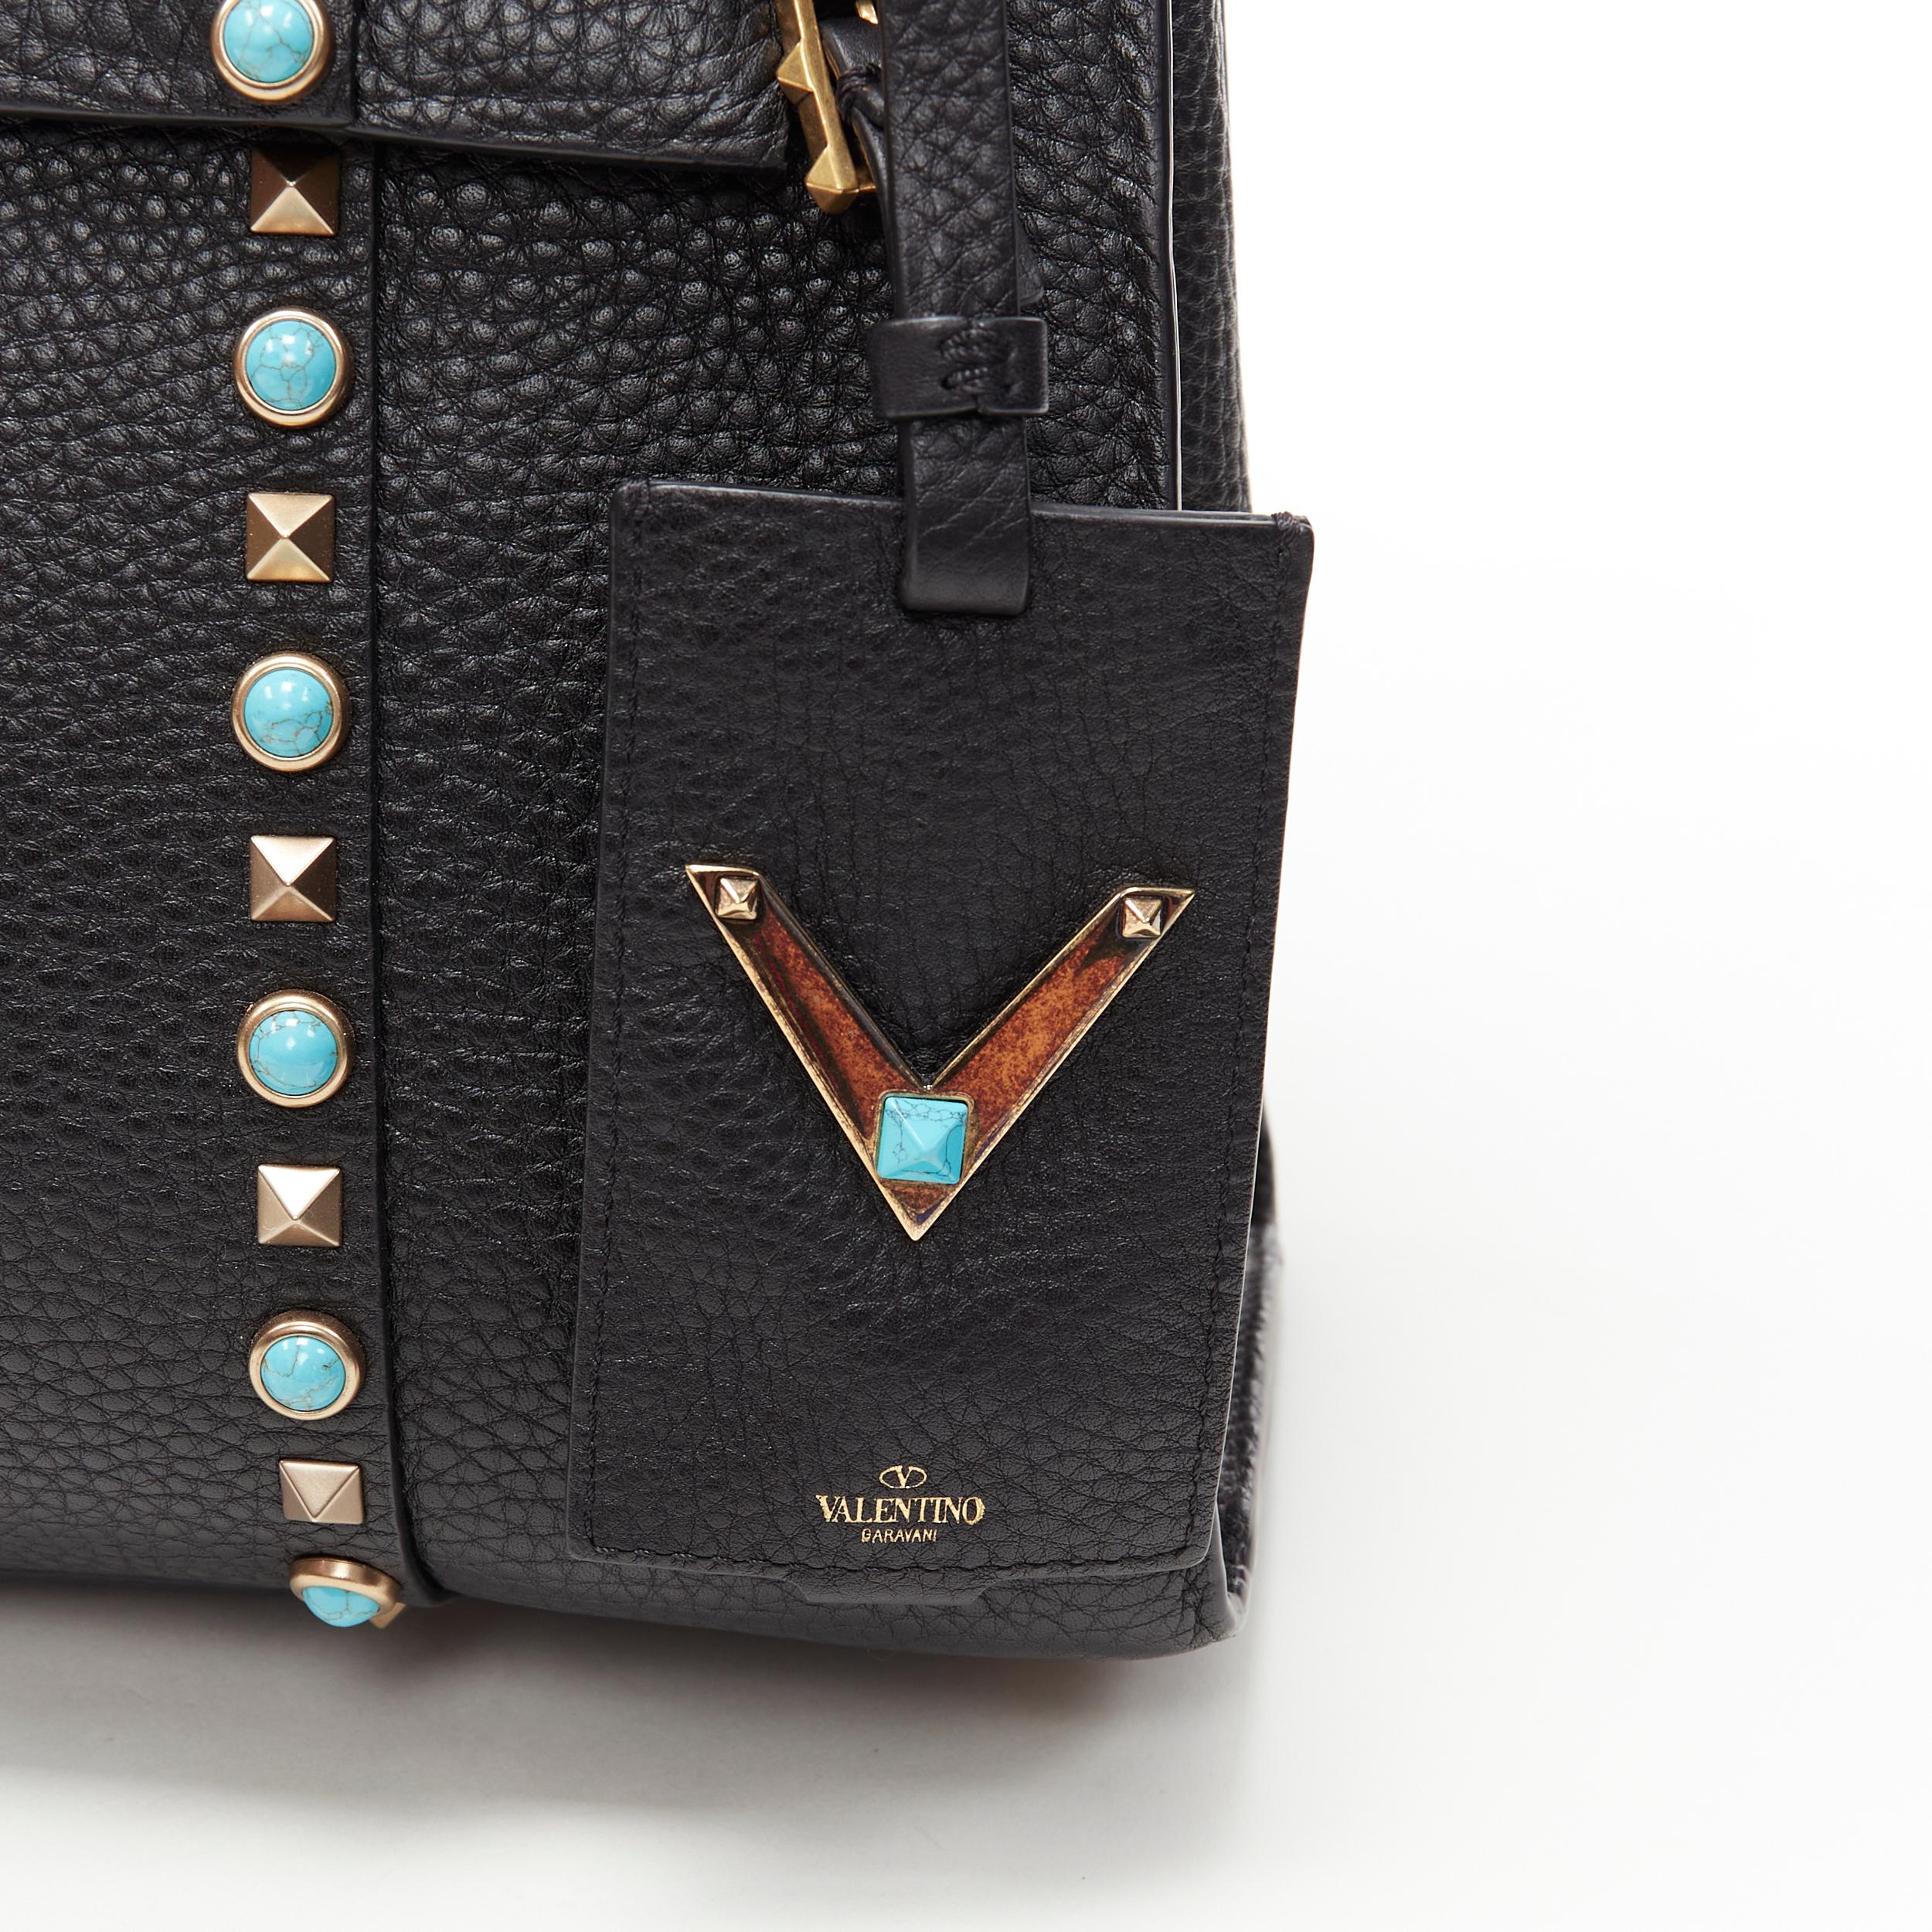 new VALENTINO black pebble leather turquoise stone Rockstud satchel shoulder bag 1